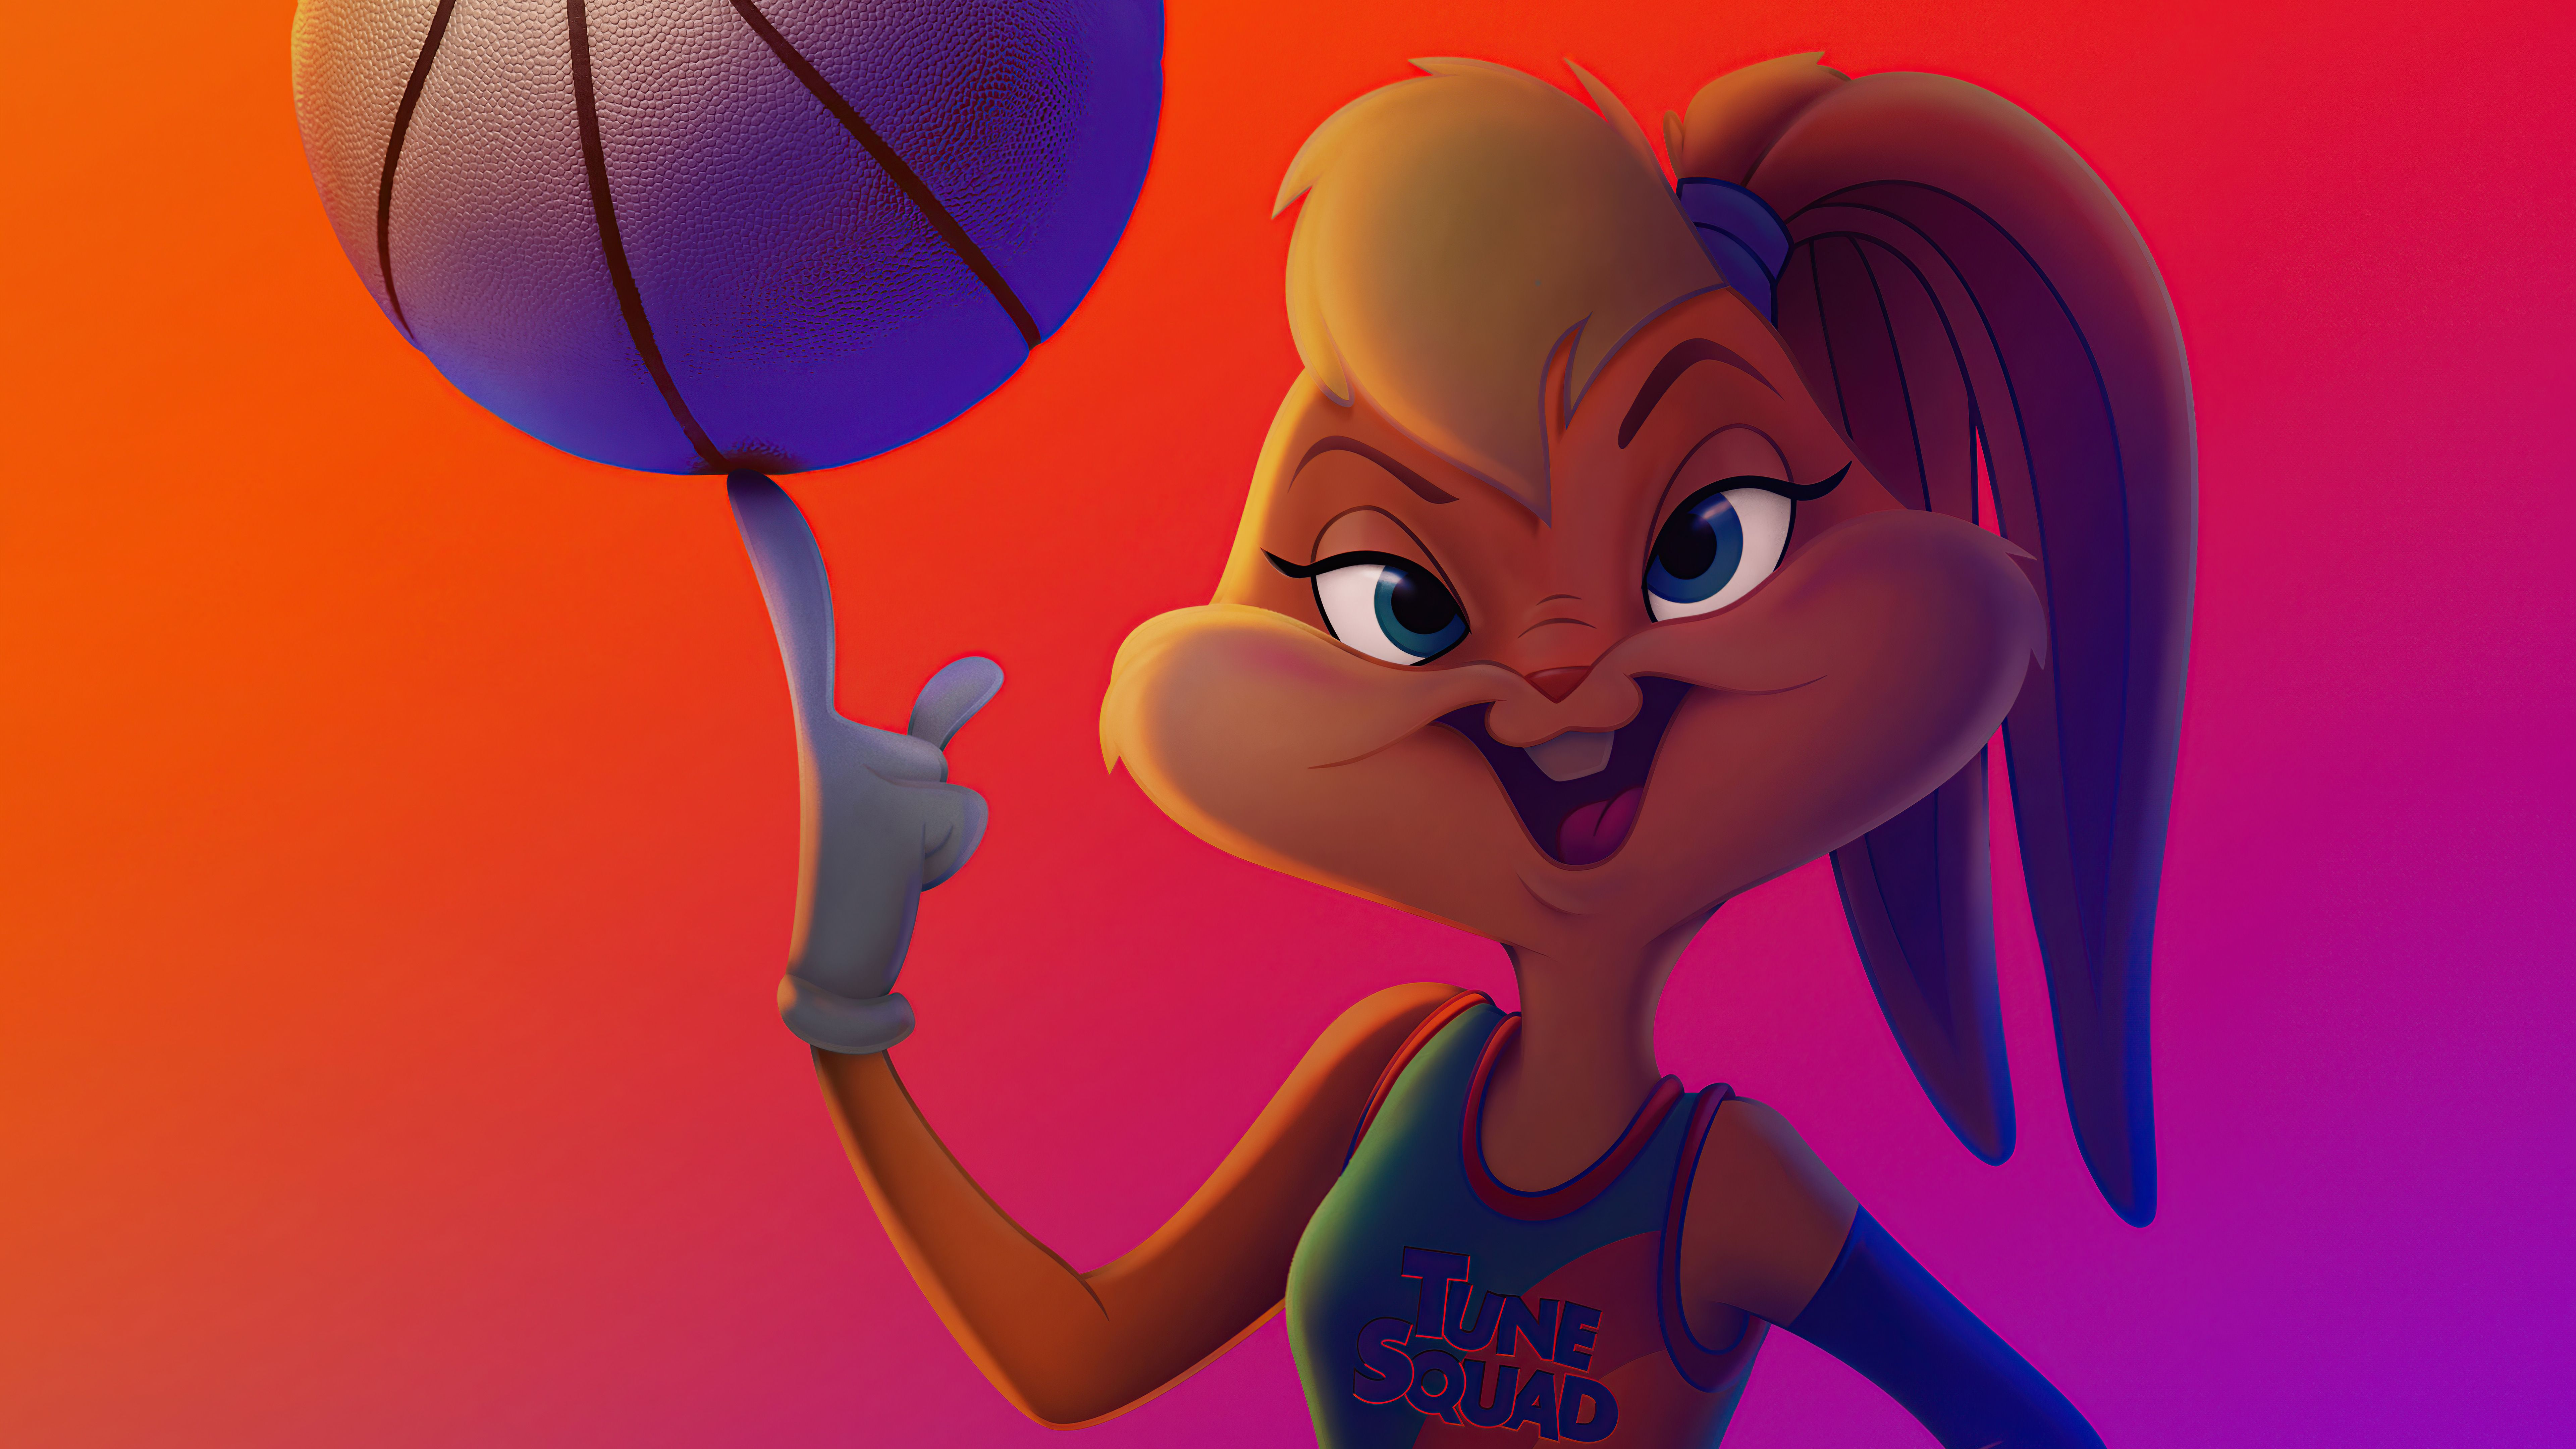 A cartoon character holding up an orange basketball - Bugs Bunny